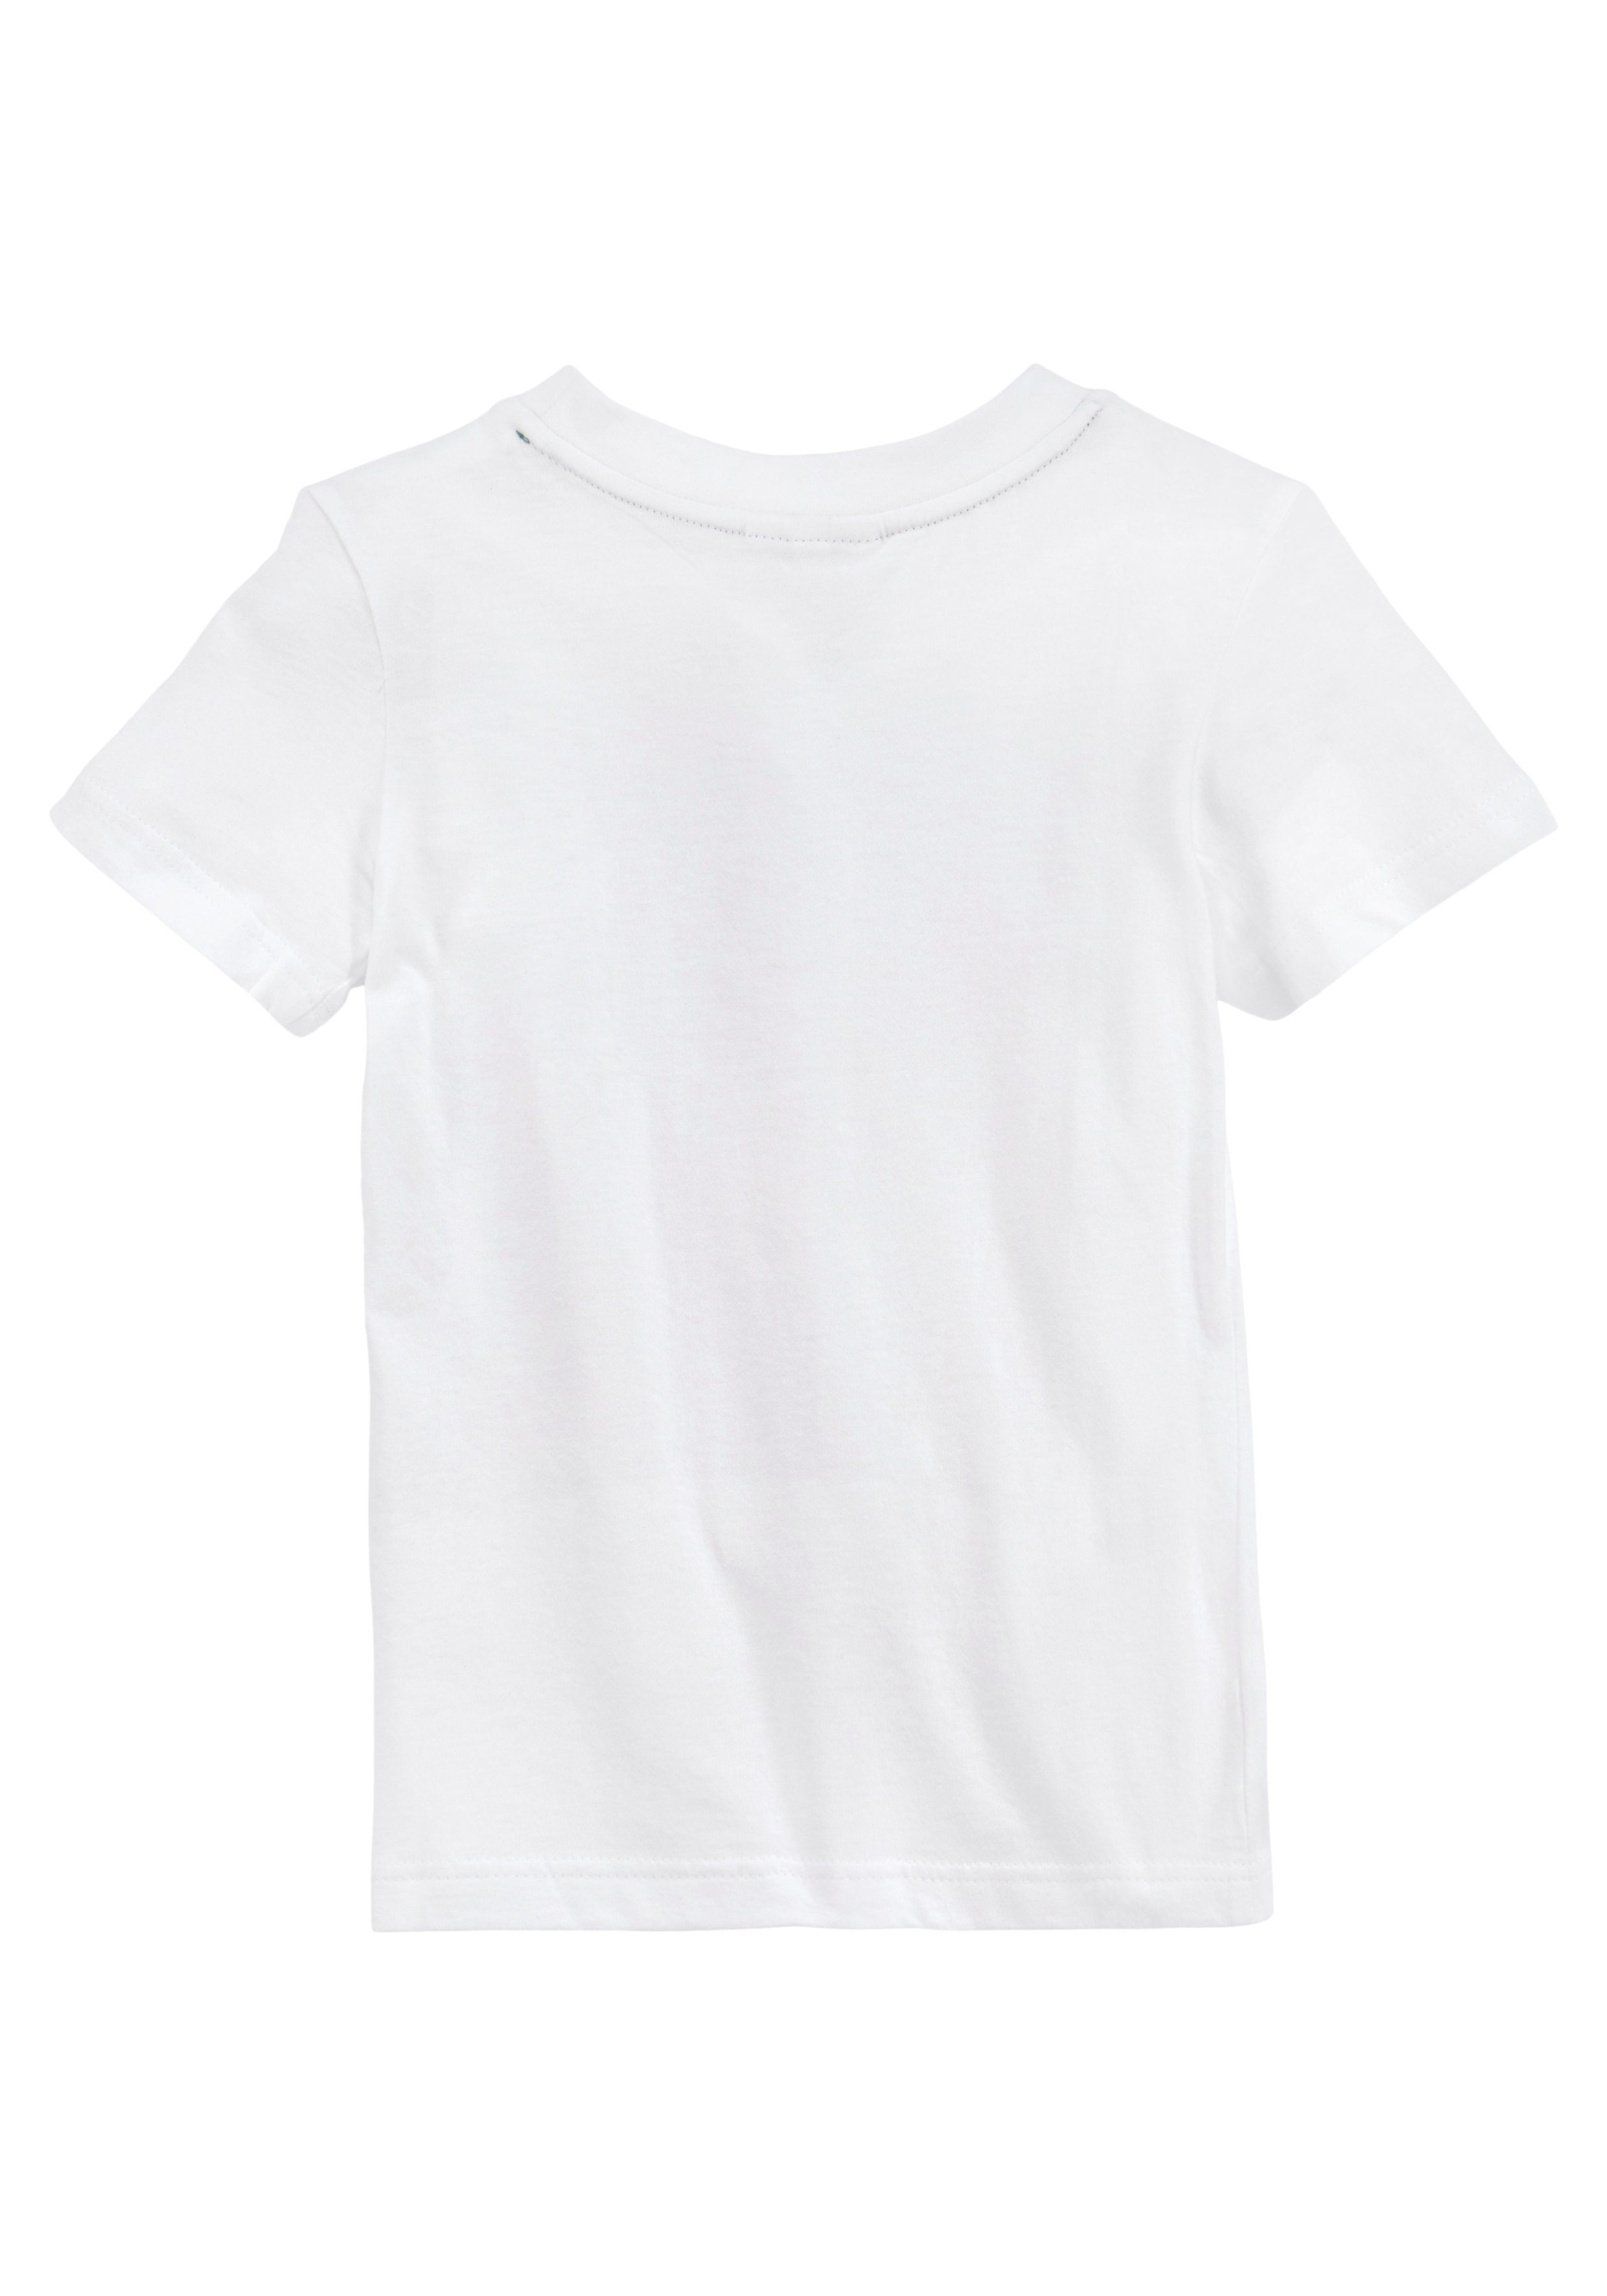 Brusthöhe Lacoste-Krokodil T-Shirt WHITE Lacoste mit auf